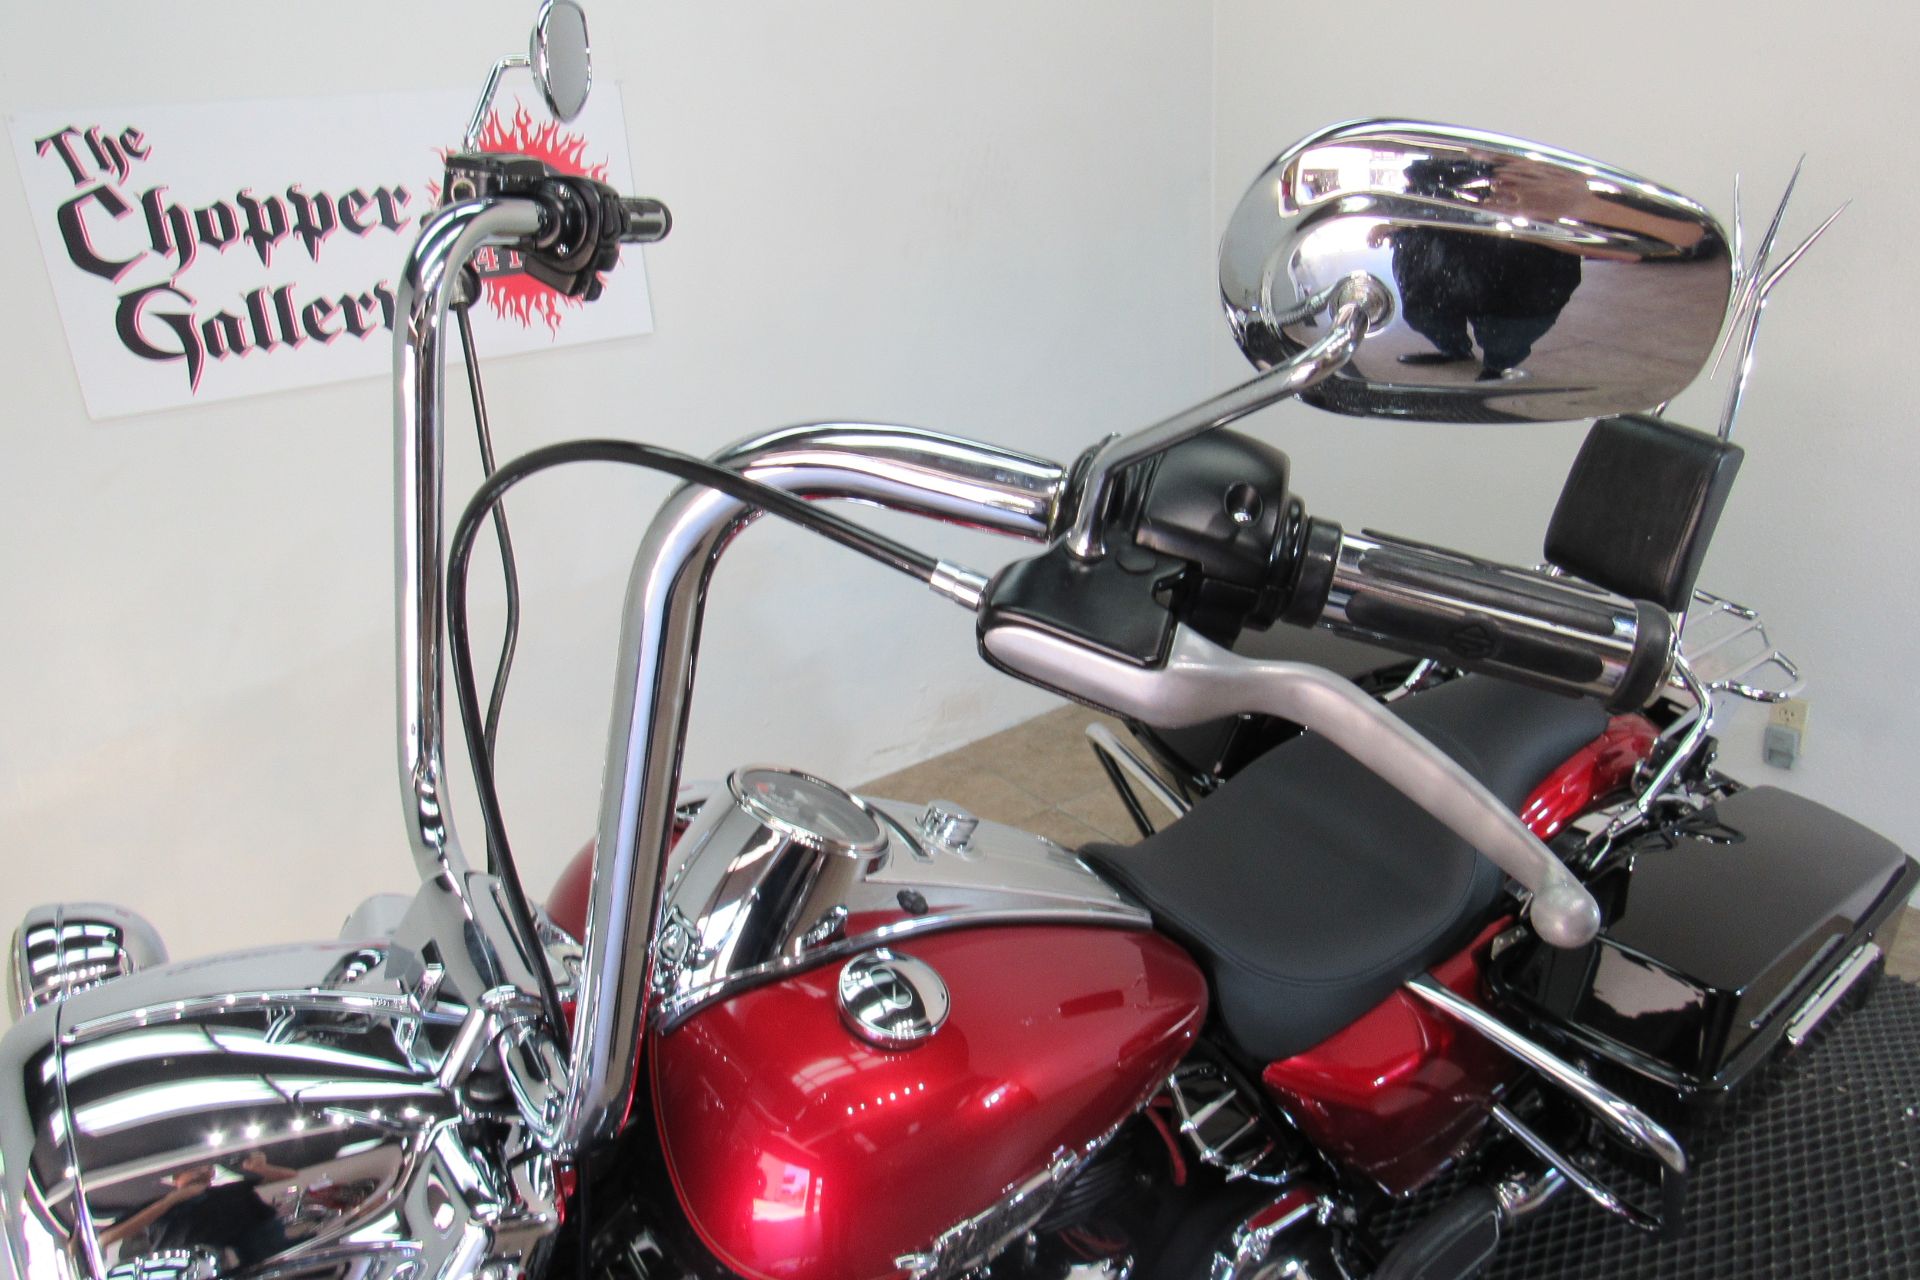 2013 Harley-Davidson Road King® Classic in Temecula, California - Photo 34